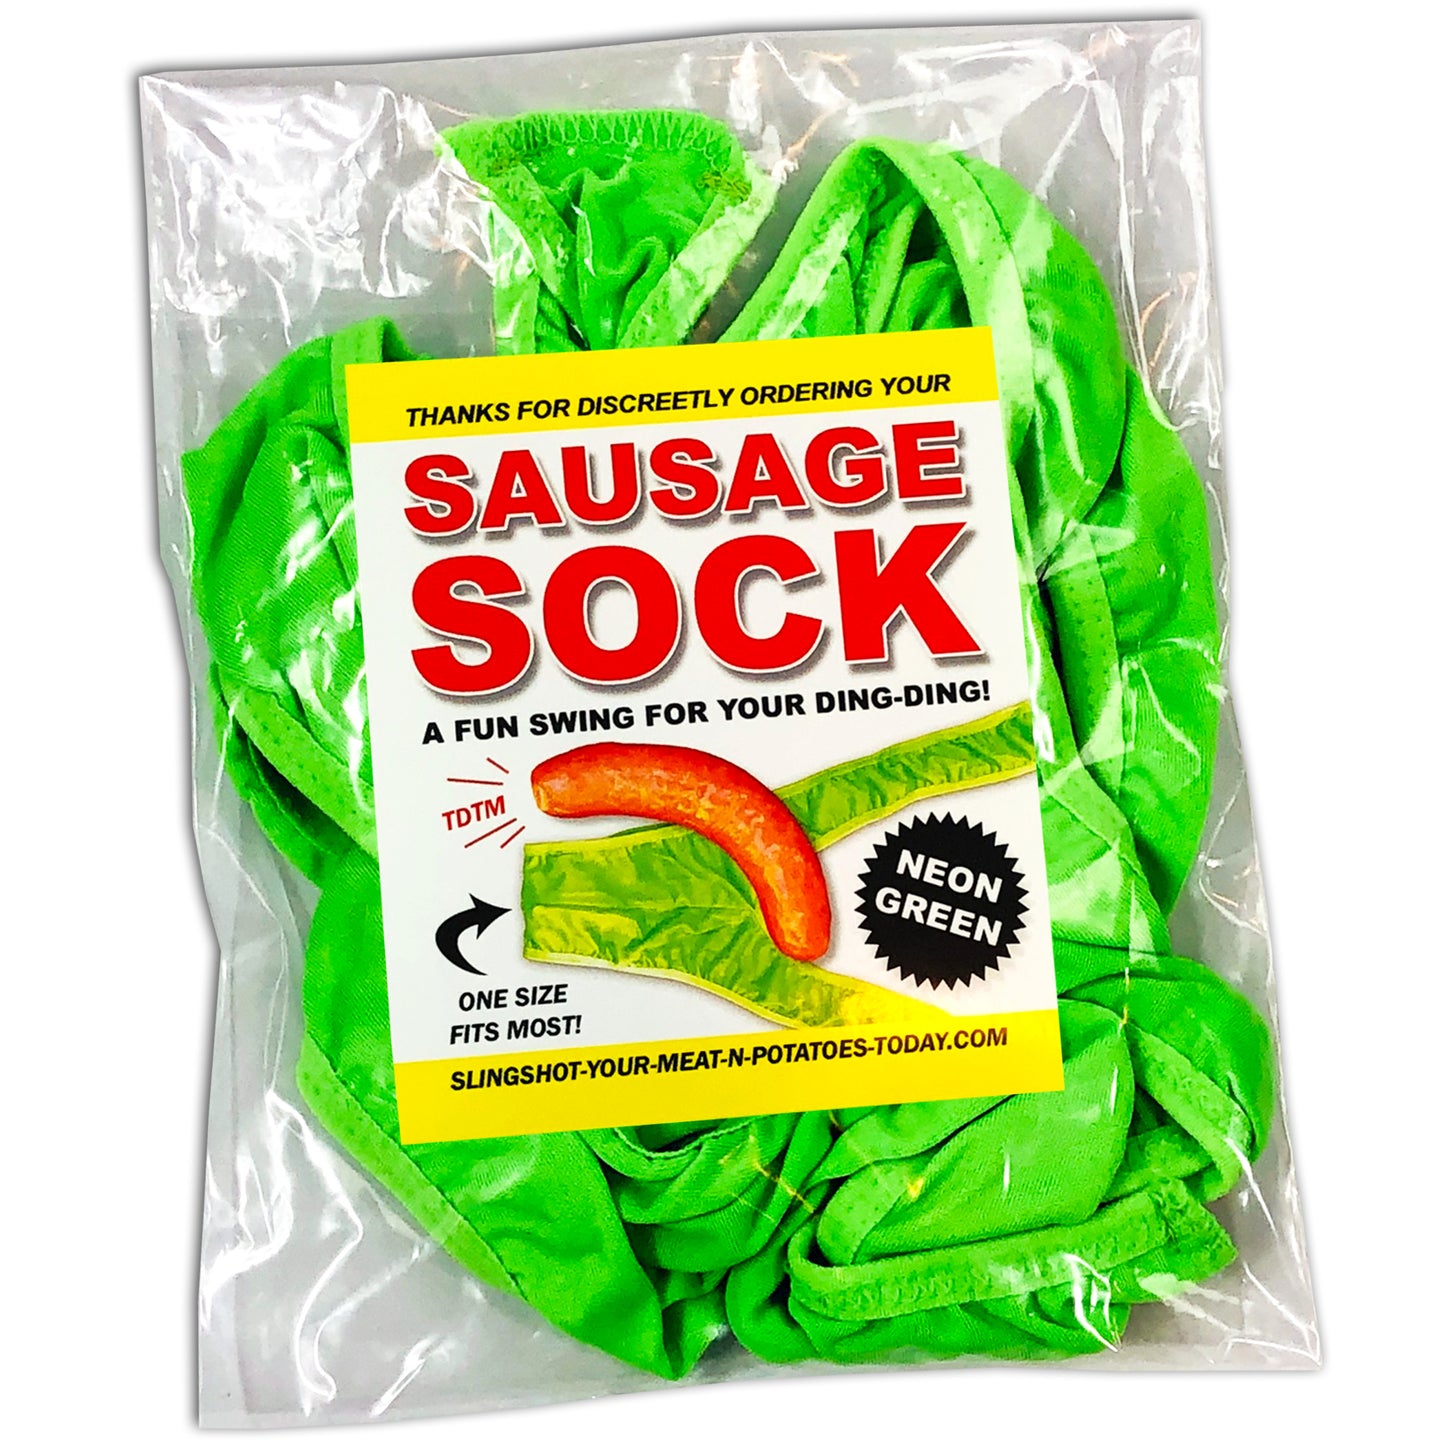 Sausage Sock embarrassing clear prank envelope